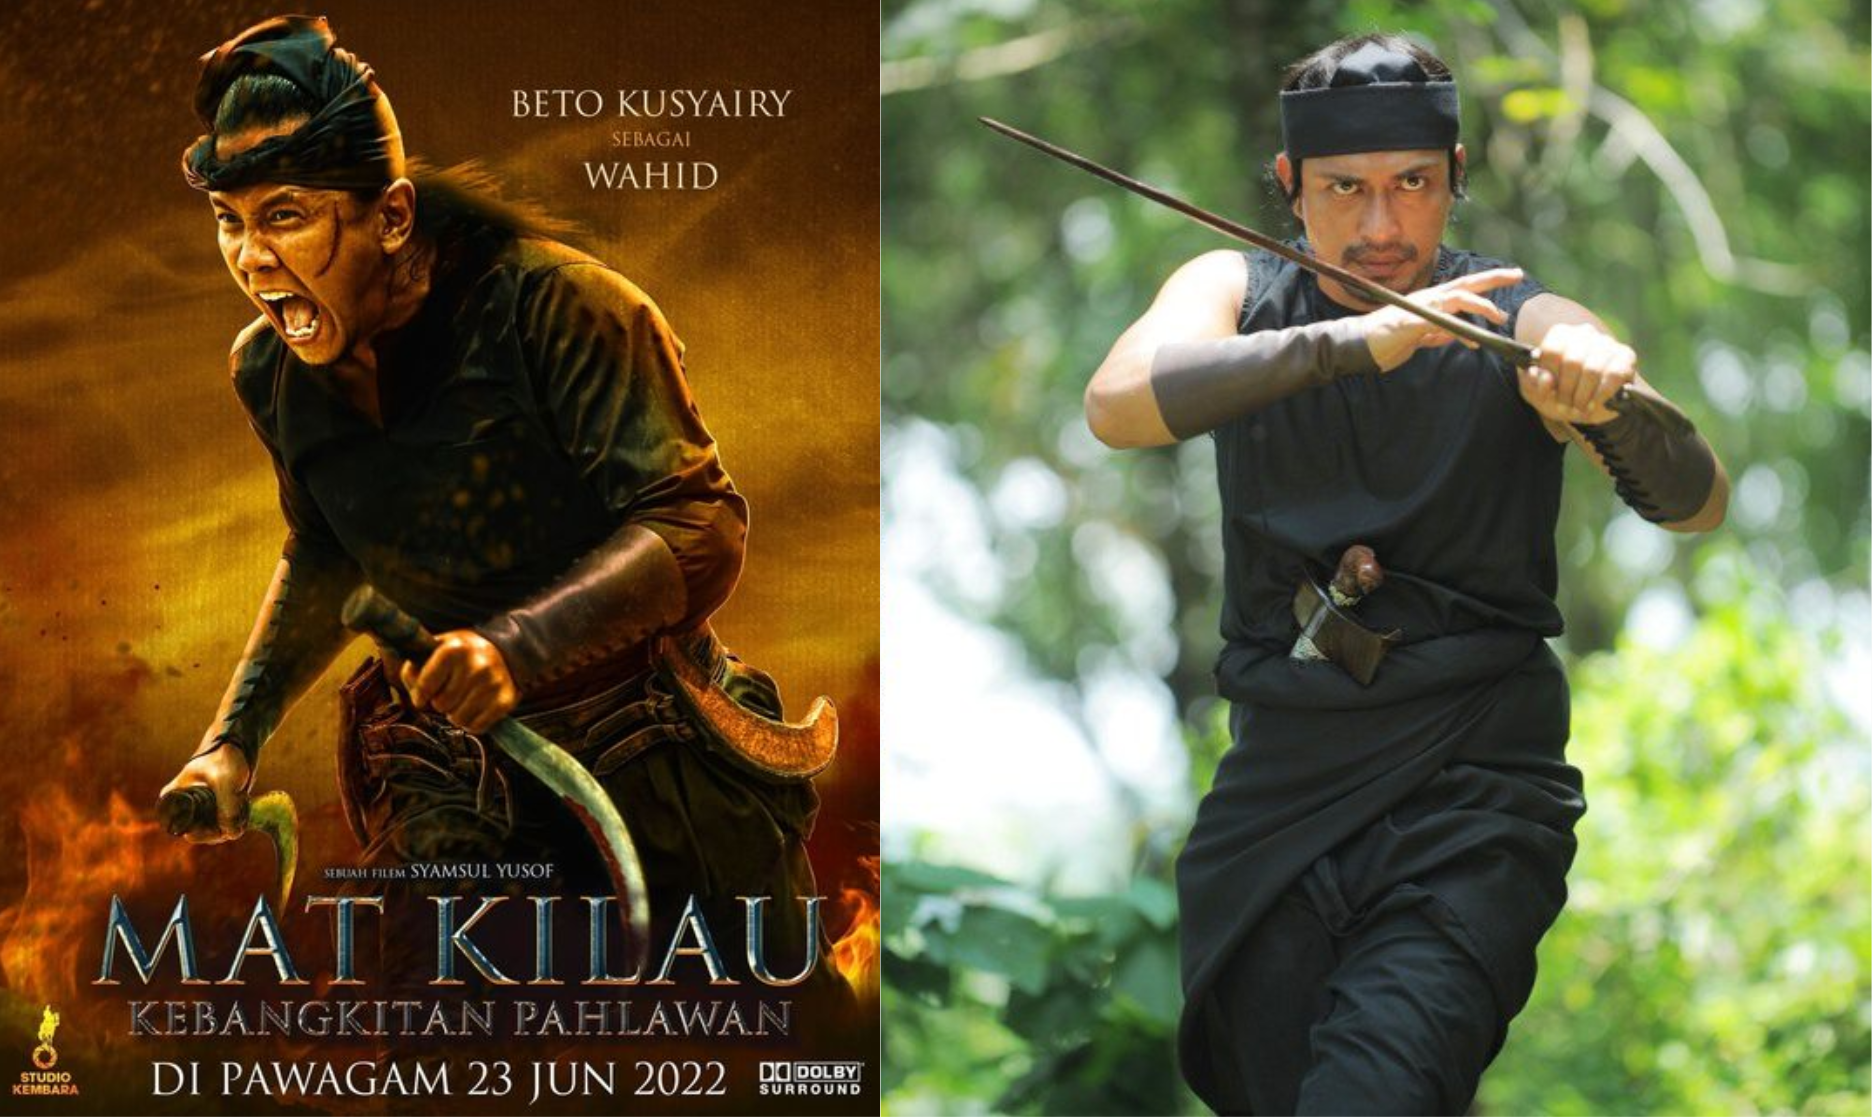 "Mat Kilau" Breaks Malaysia’s Blockbusters After Raking In RM12.2 Million Over 4 Days